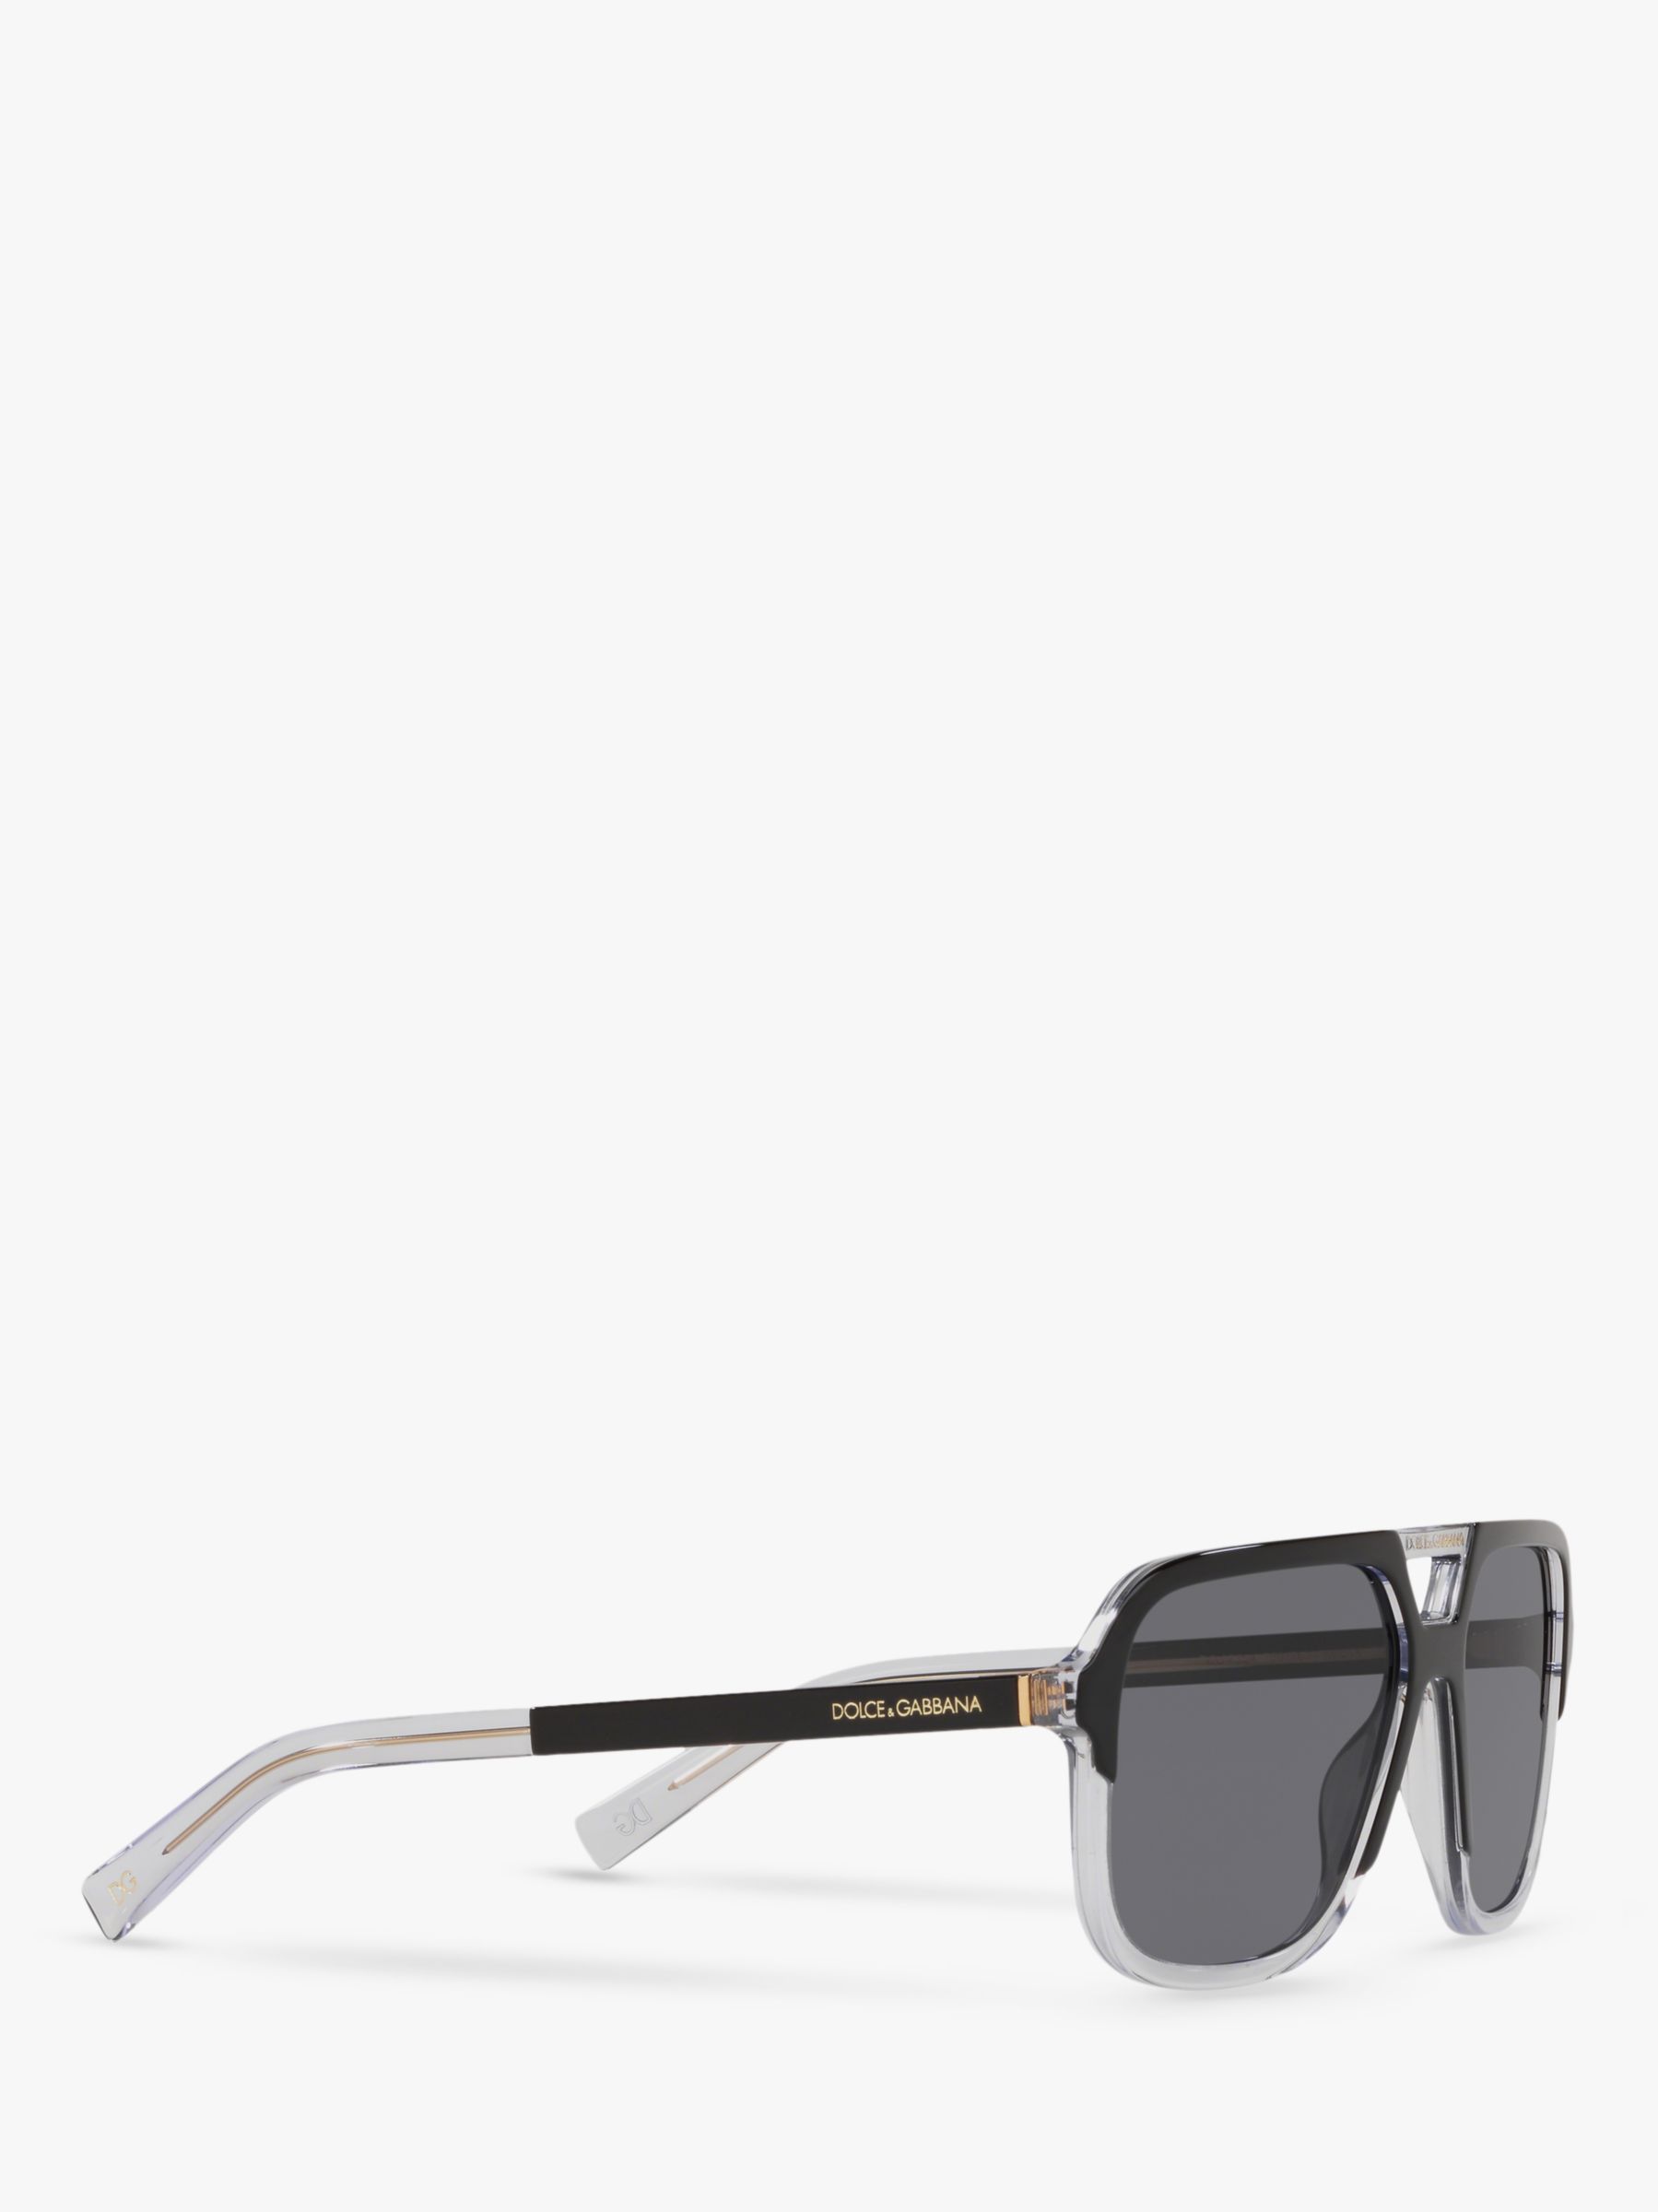 Buy Dolce & Gabbana DG4354 Men's Polarised Square Sunglasses, Black Clear/Grey Online at johnlewis.com